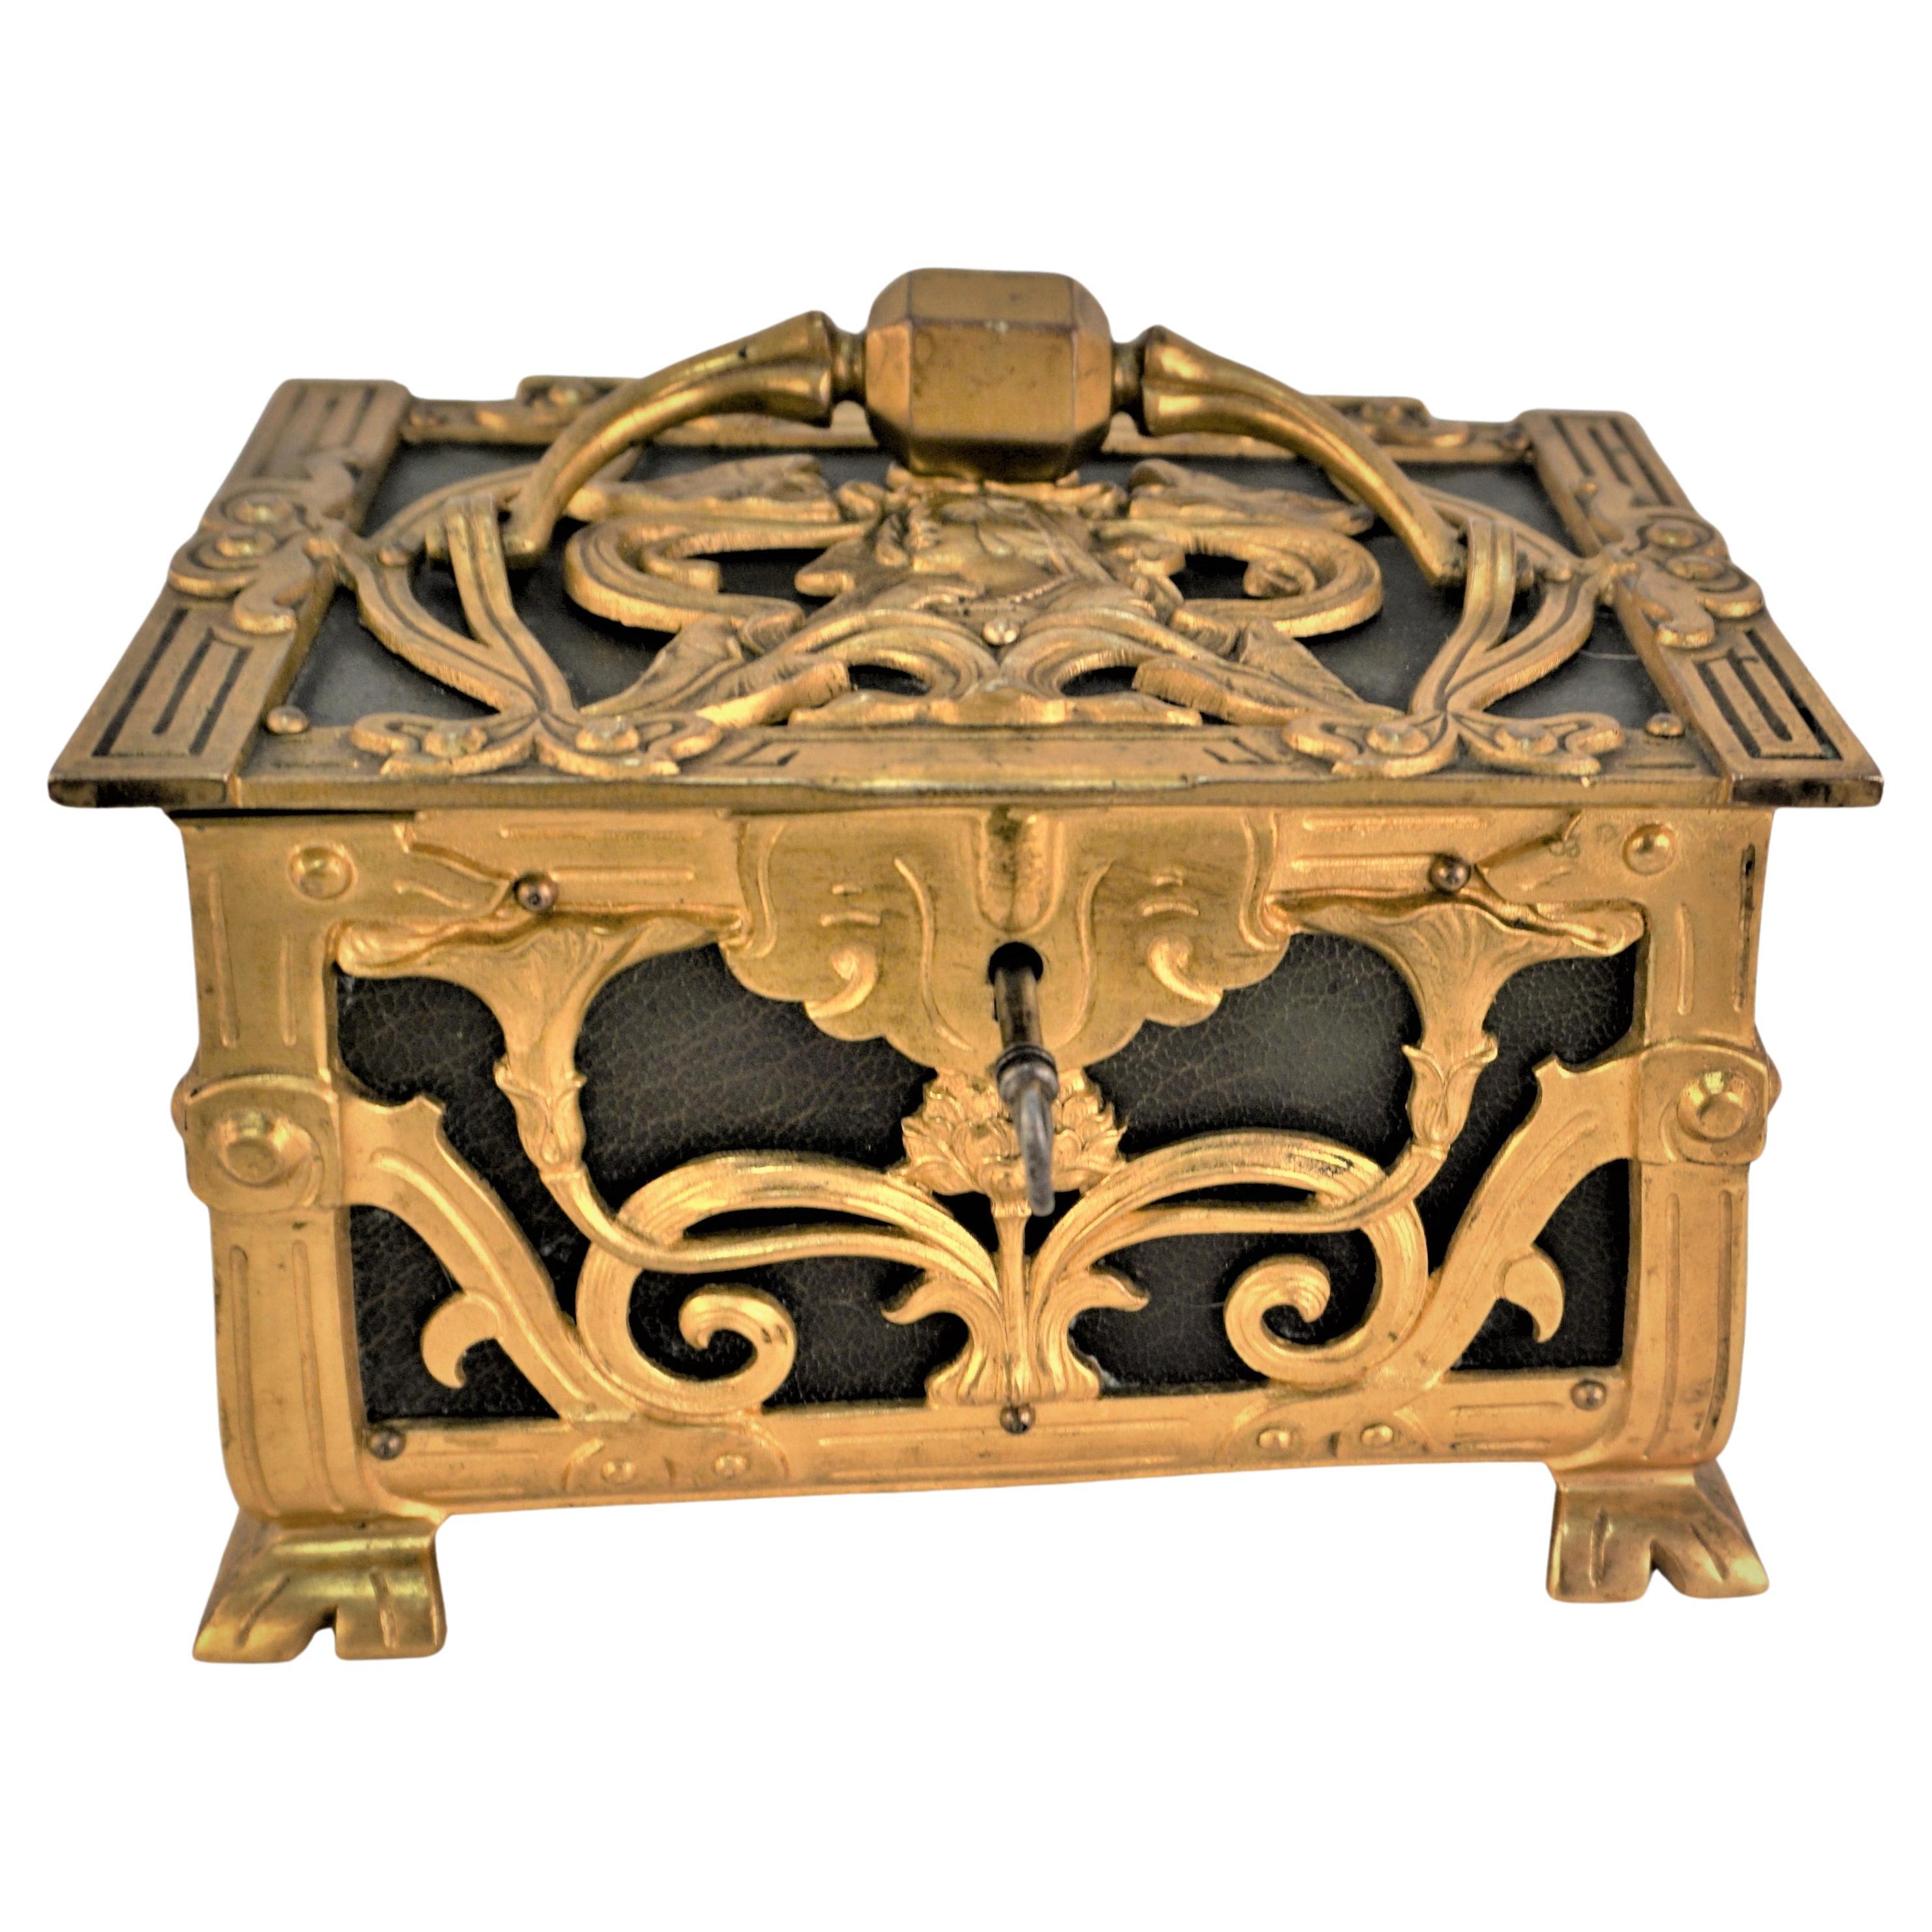 Glit Bronze Art Nouveau Decorative Jewelry Box